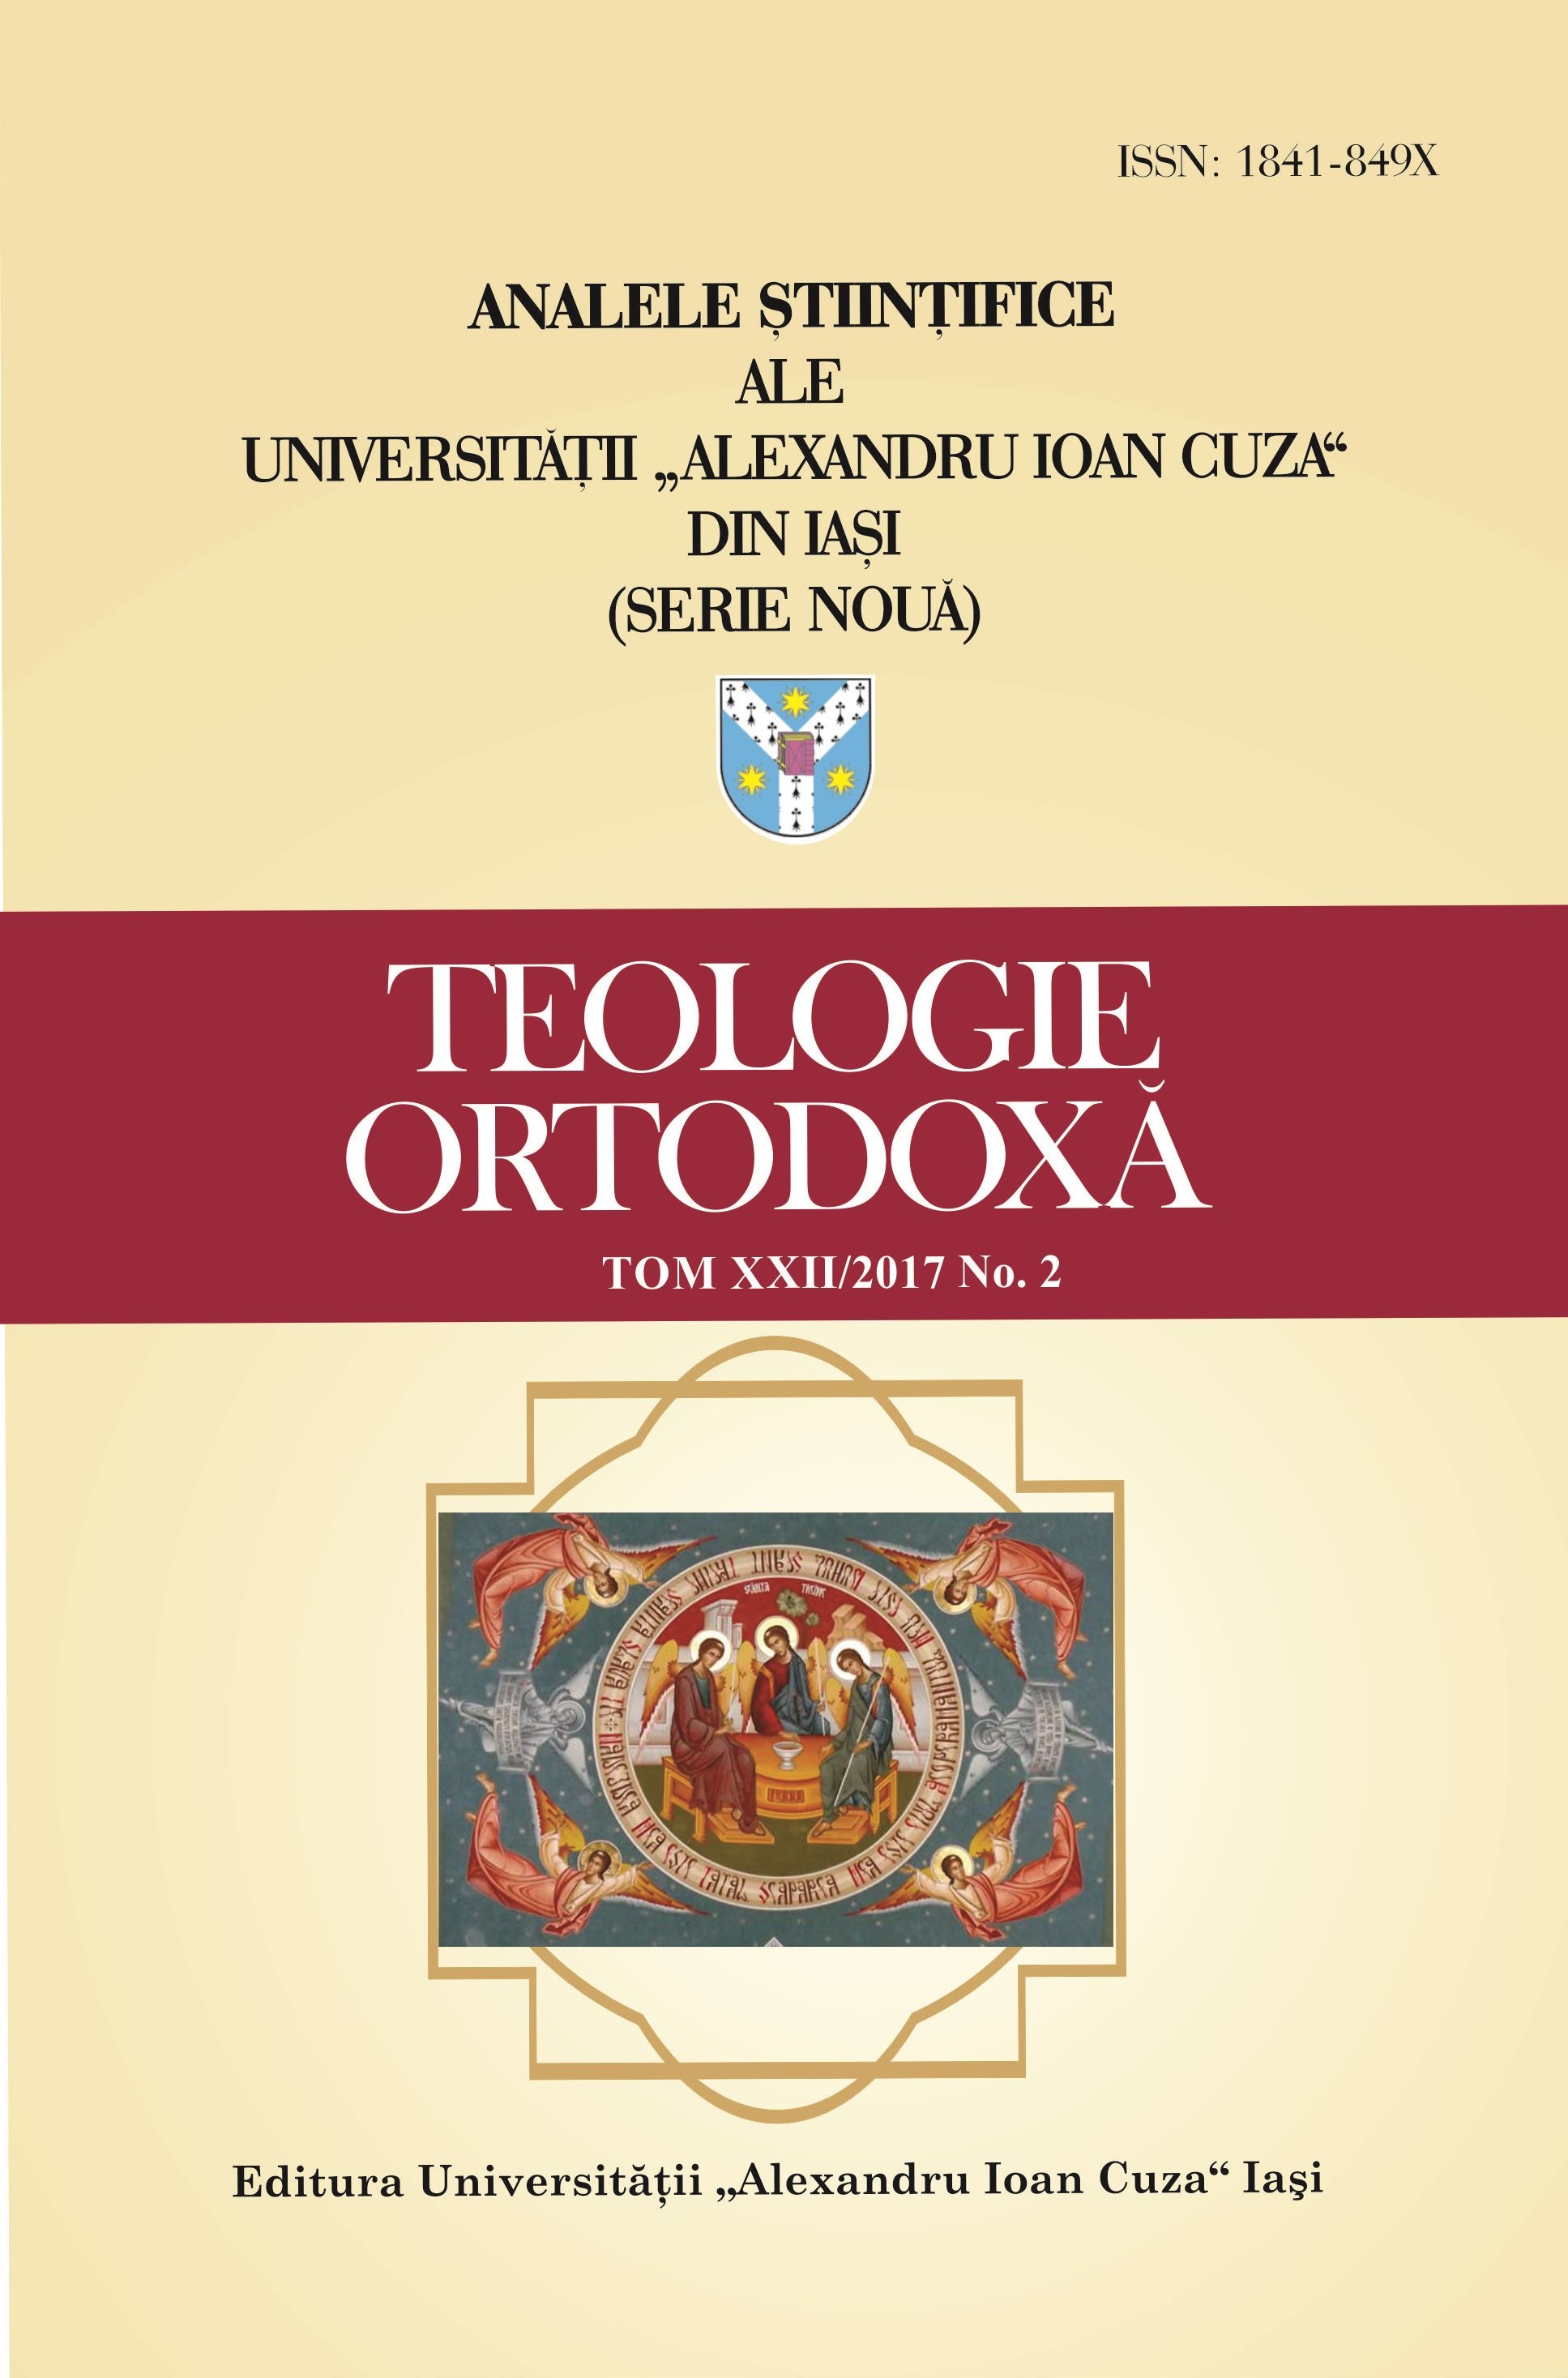 Arhim. Benedict Sauciuc, Liturgical Objects and Religious Odornamnets in Neamț Monastery , Editura Sf. Mina, Iaşi, 2017 Cover Image